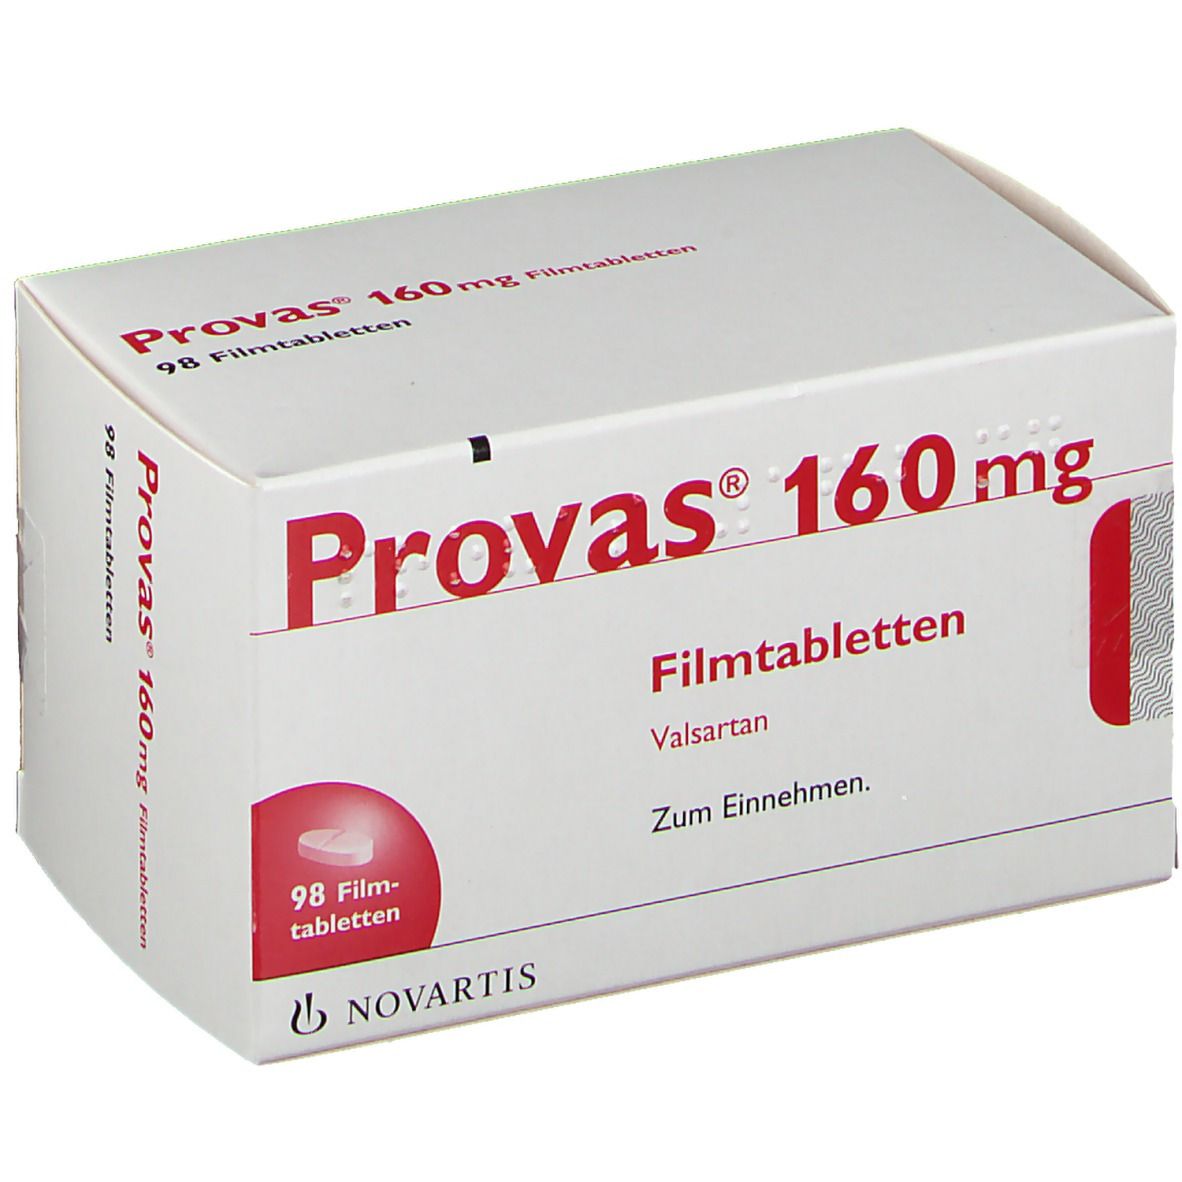 Provas® 160 mg